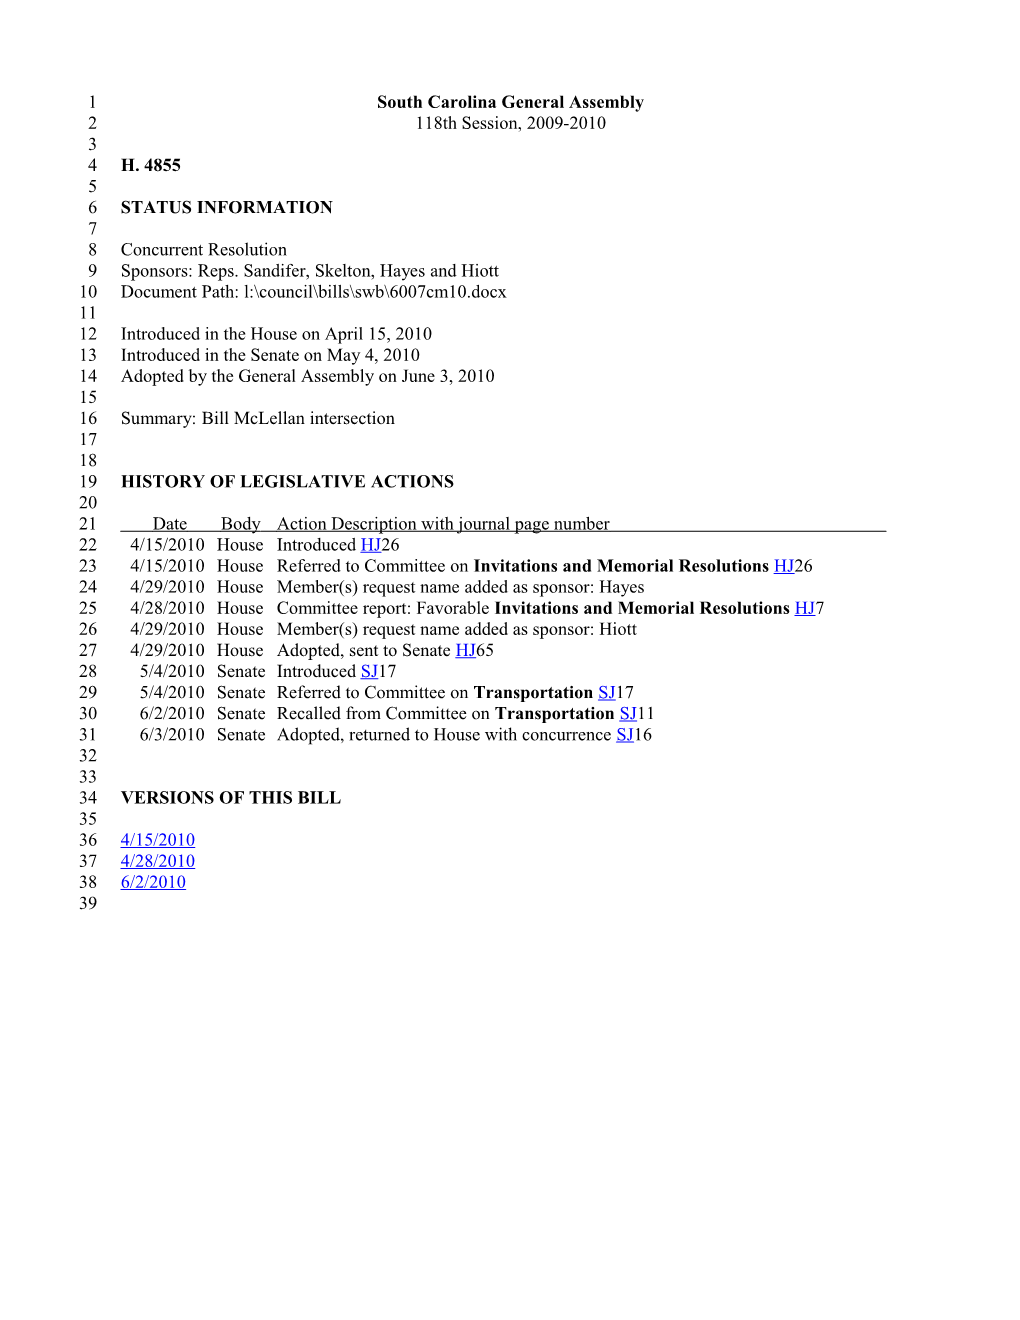 2009-2010 Bill 4855: Bill Mclellan Intersection - South Carolina Legislature Online